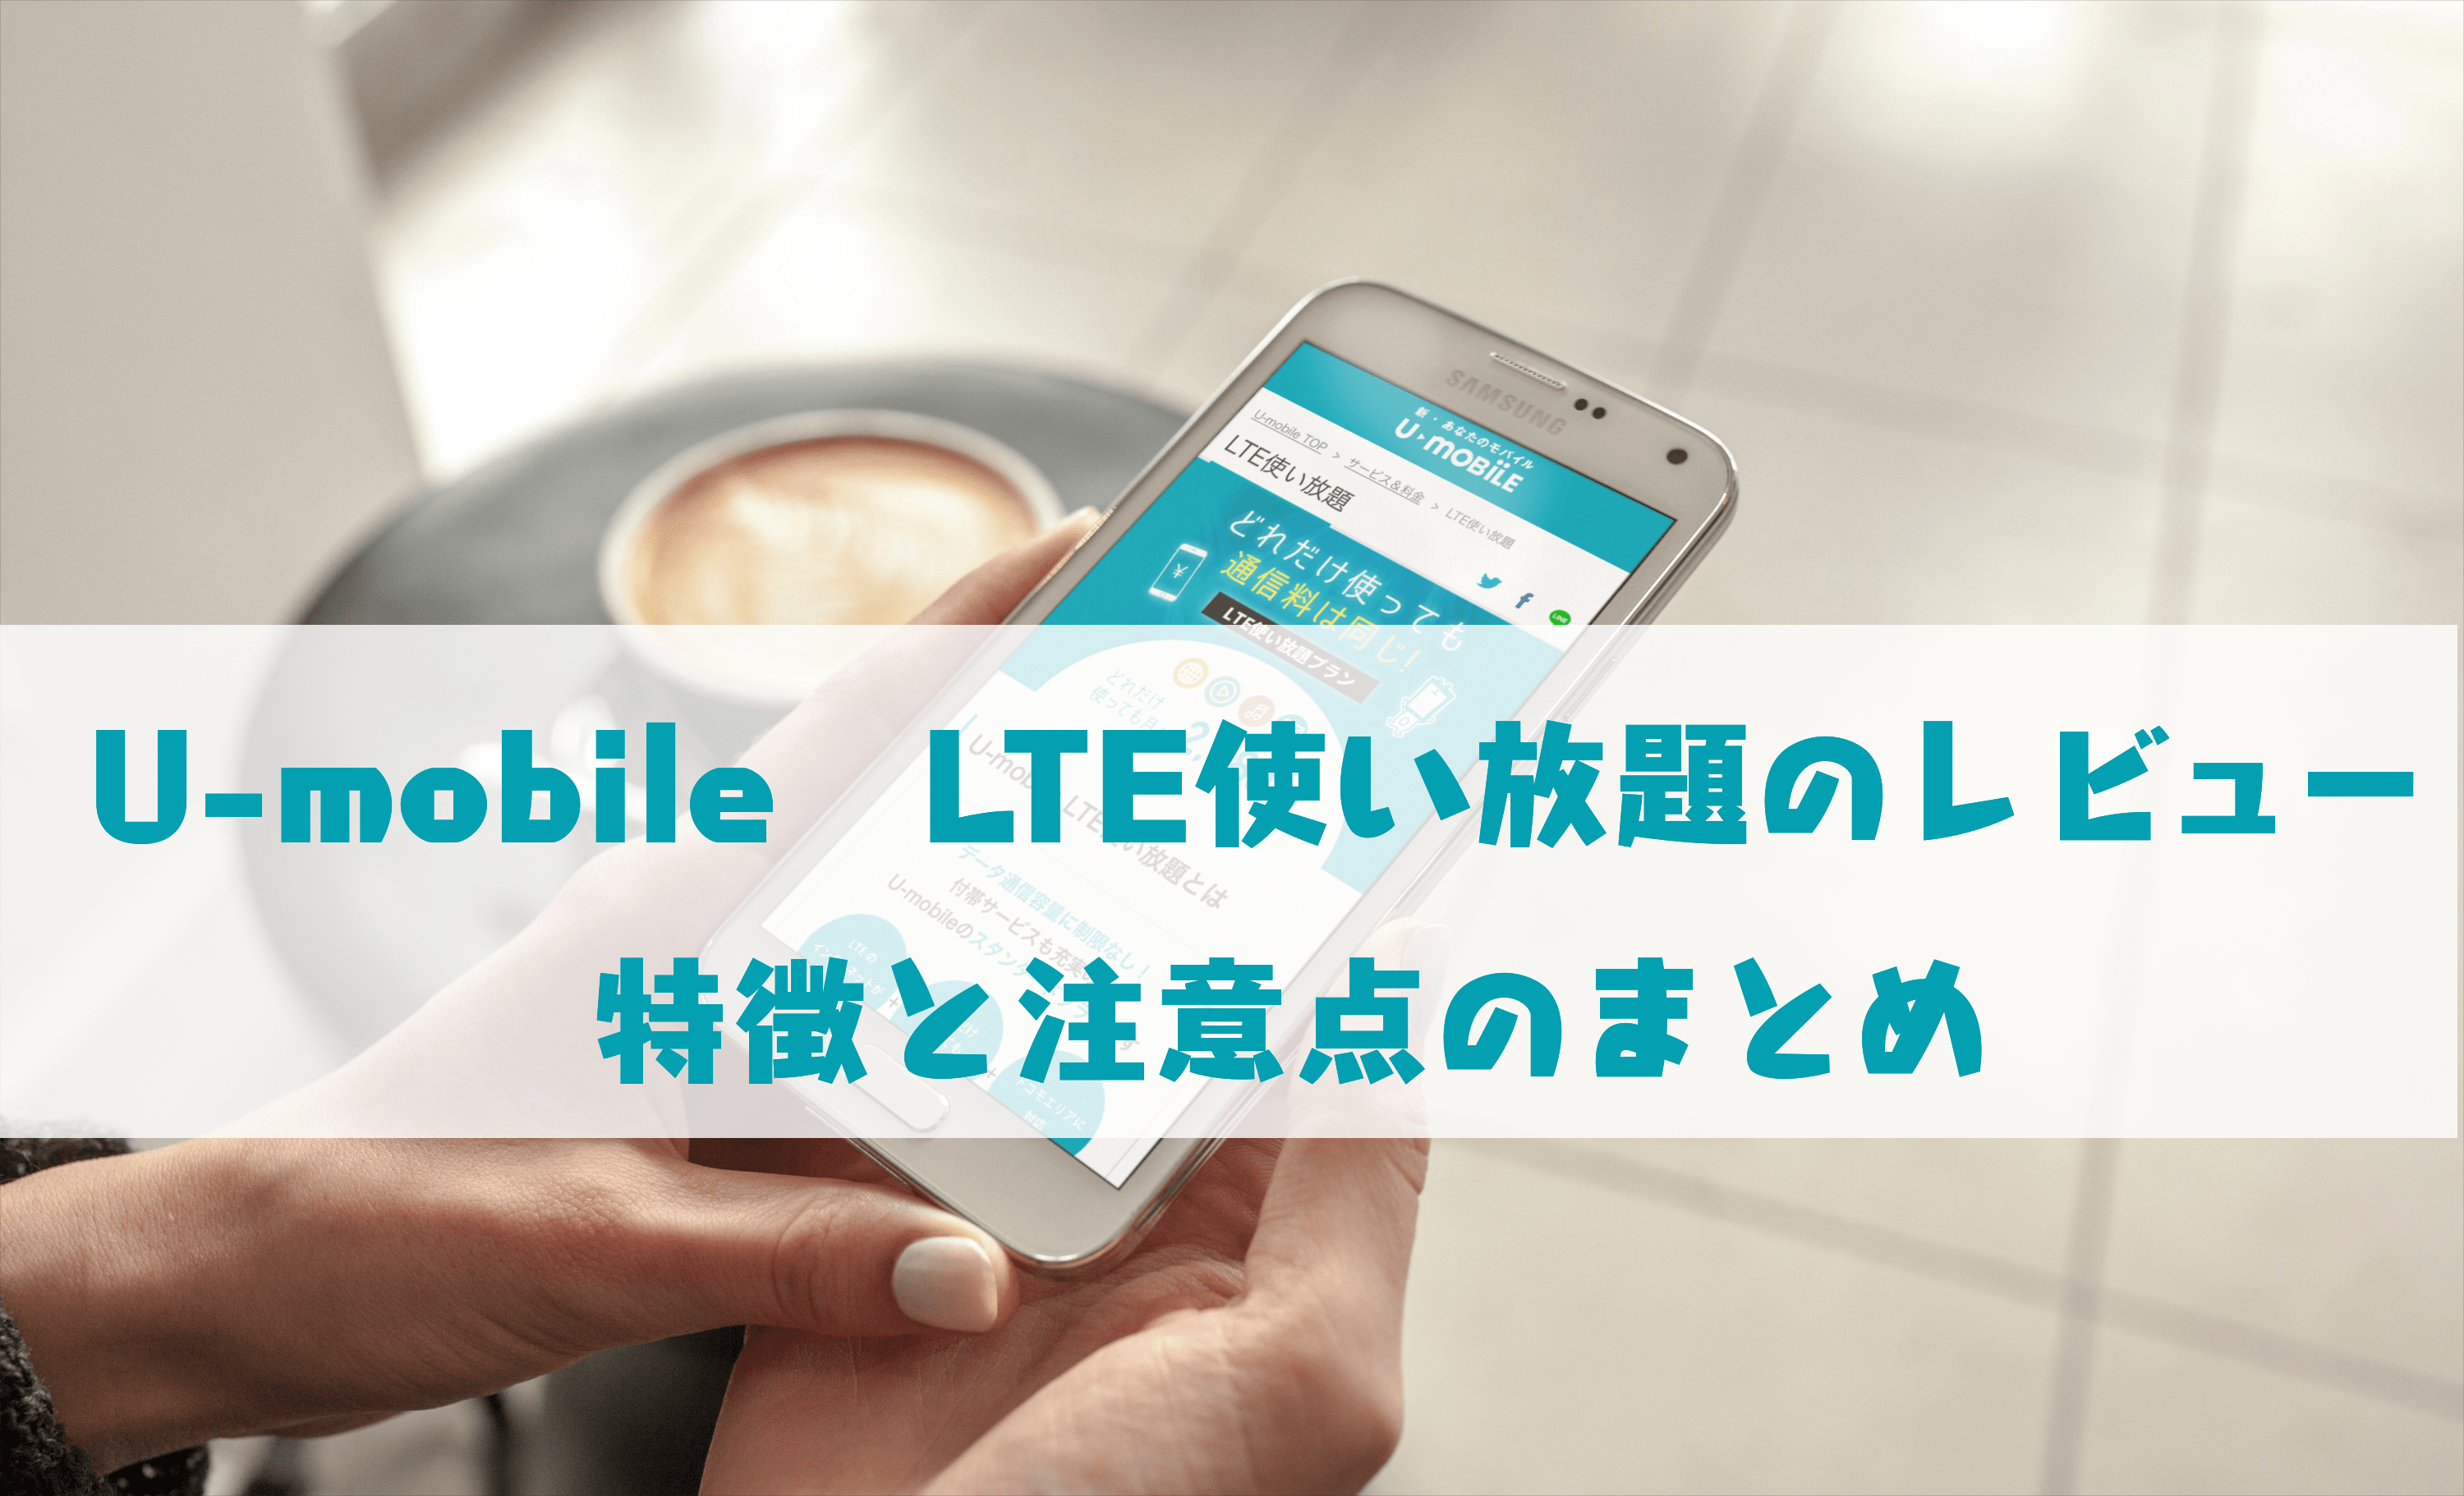 「U-mobile LTE使い放題」の詳細説明の記事のサムネイル画像